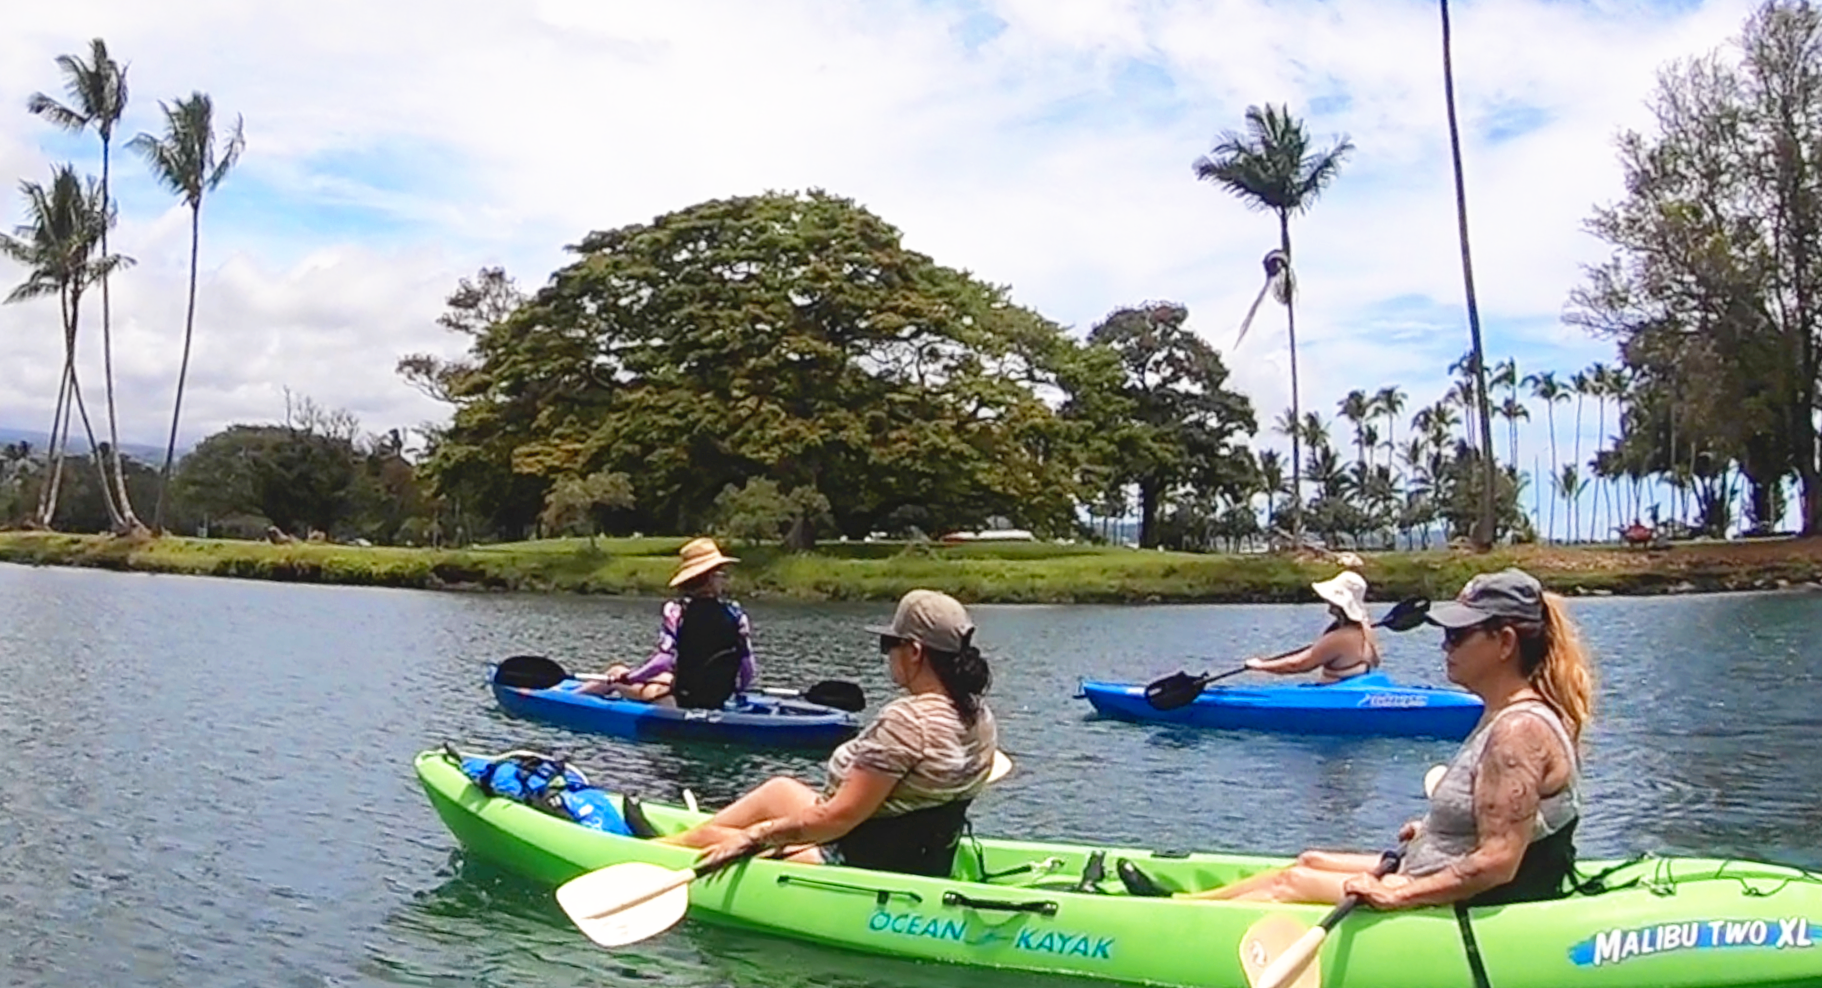 Wailoa River to King Kamehameha Statue Kayak in Hilo